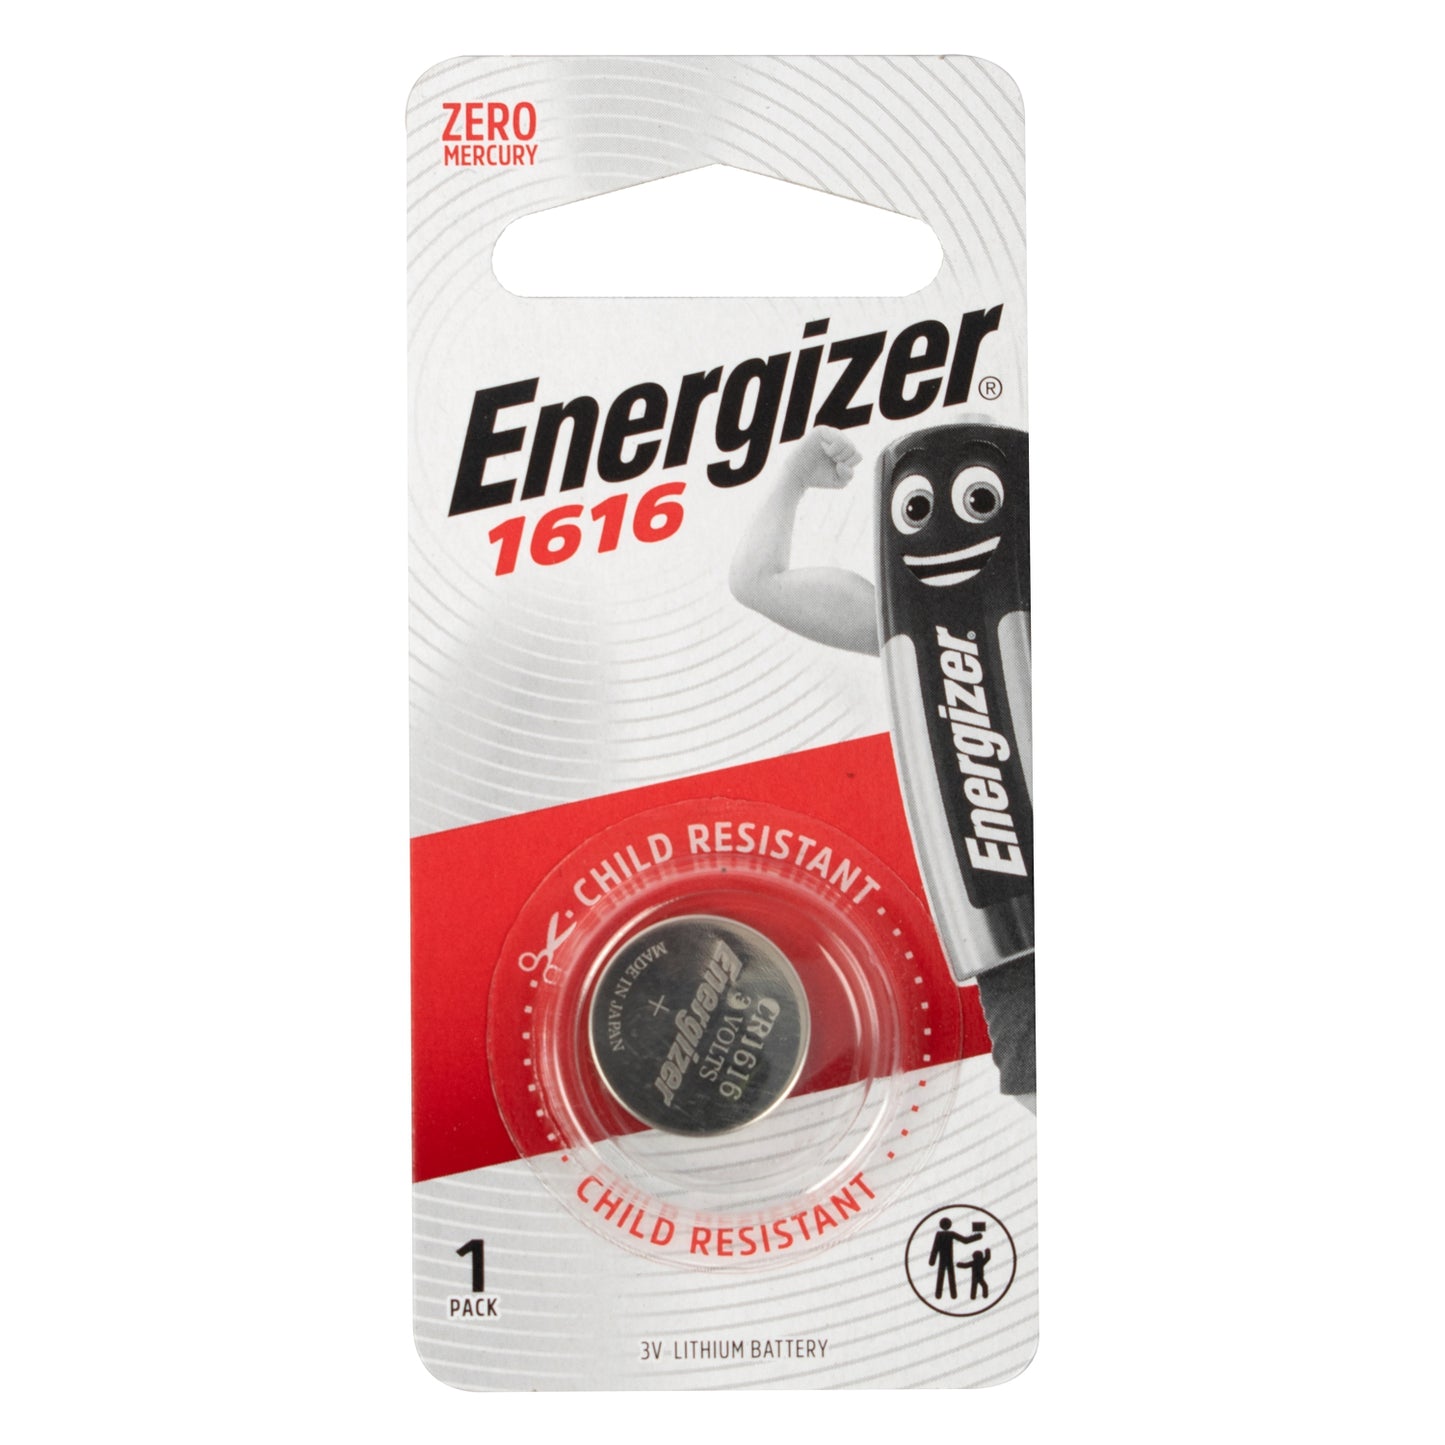 Energizer 1616 3v lithium coin battery (1 pack) (moq 12)